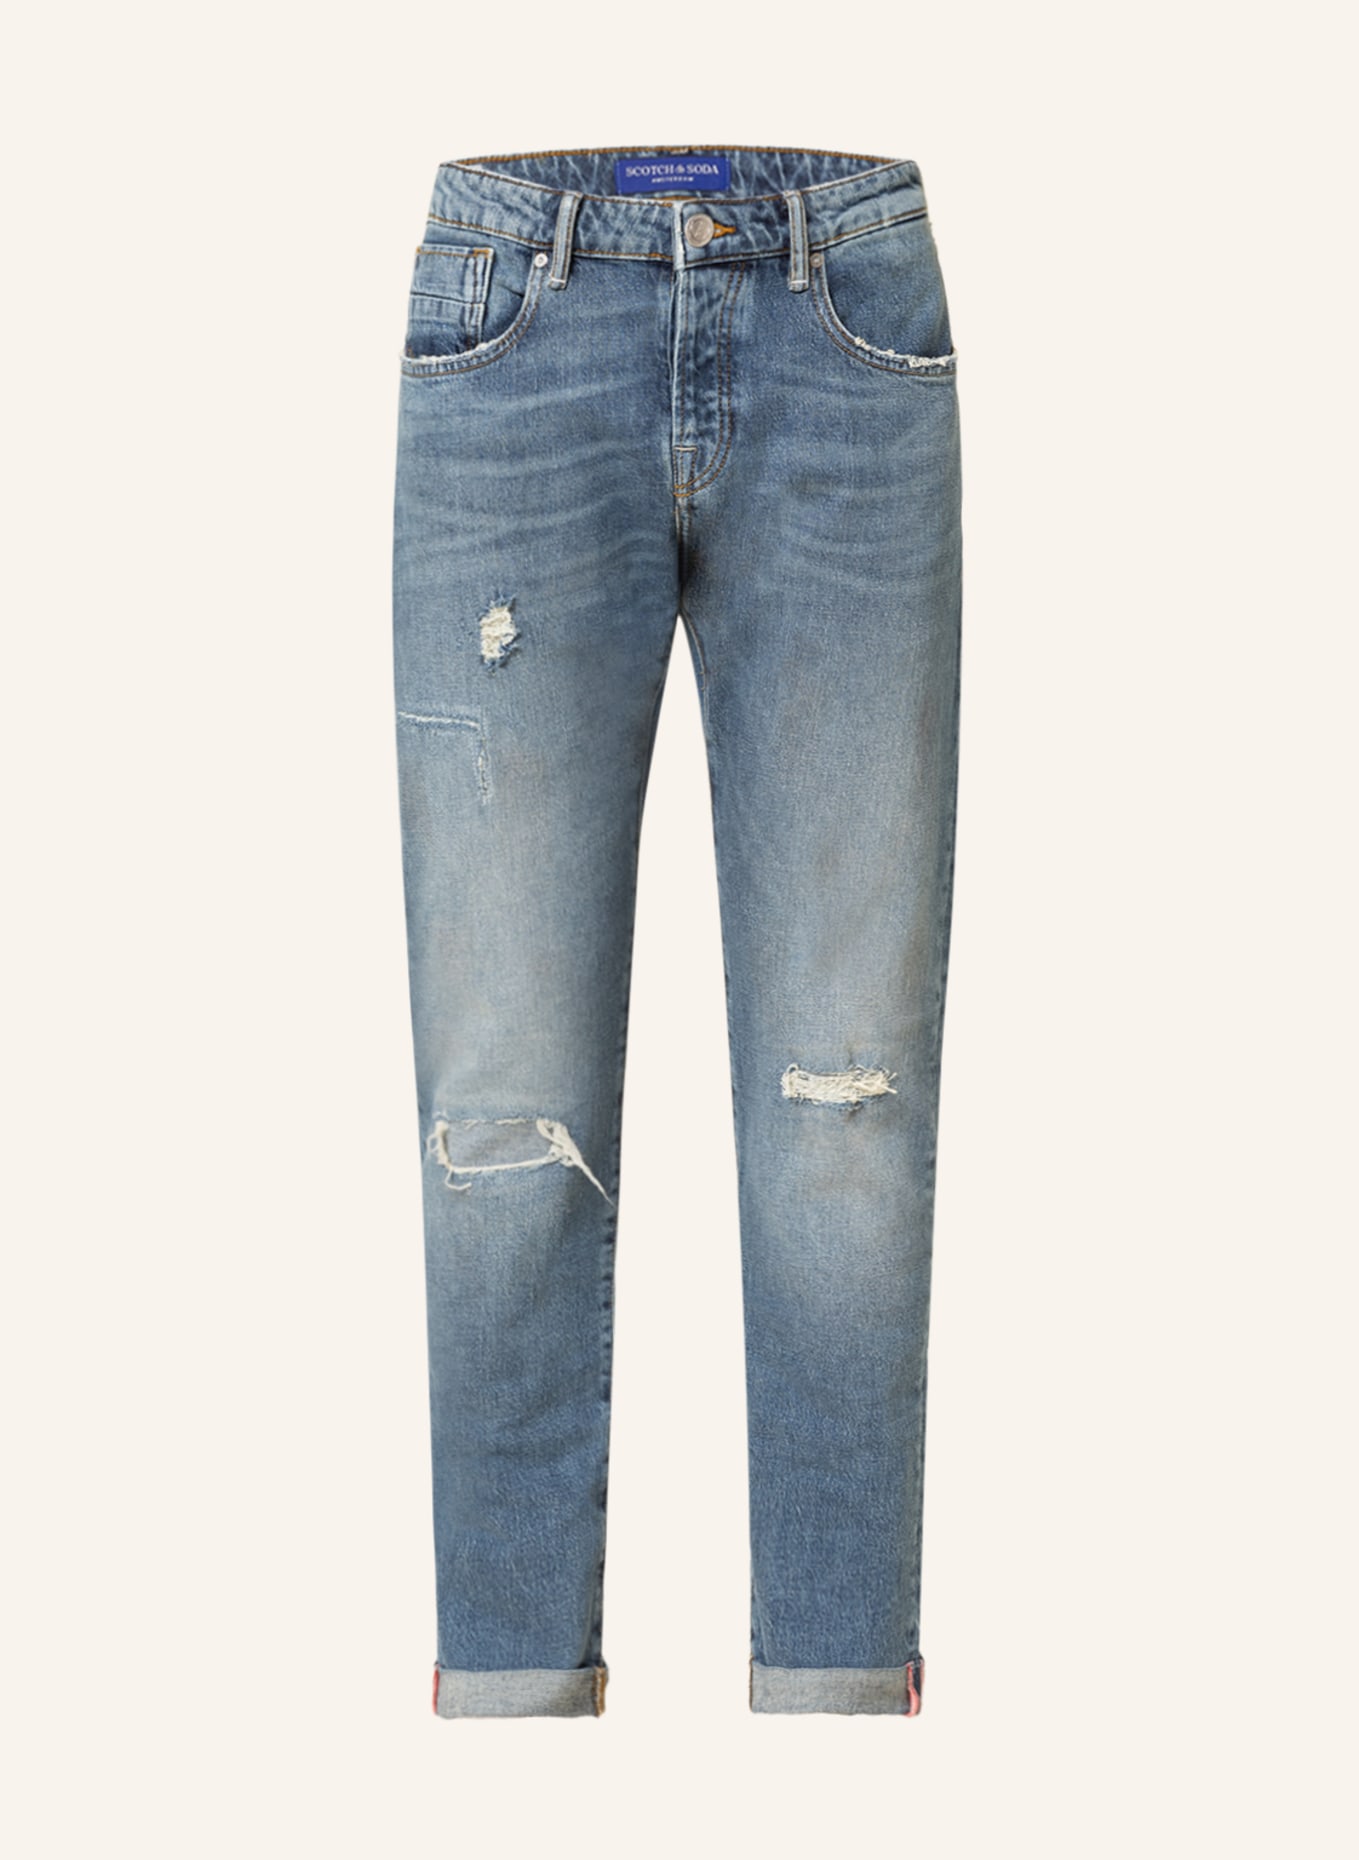 SCOTCH & SODA Jeans RALSTON Regular Slim Fit, Farbe: 5242 Blue Crash (Bild 1)